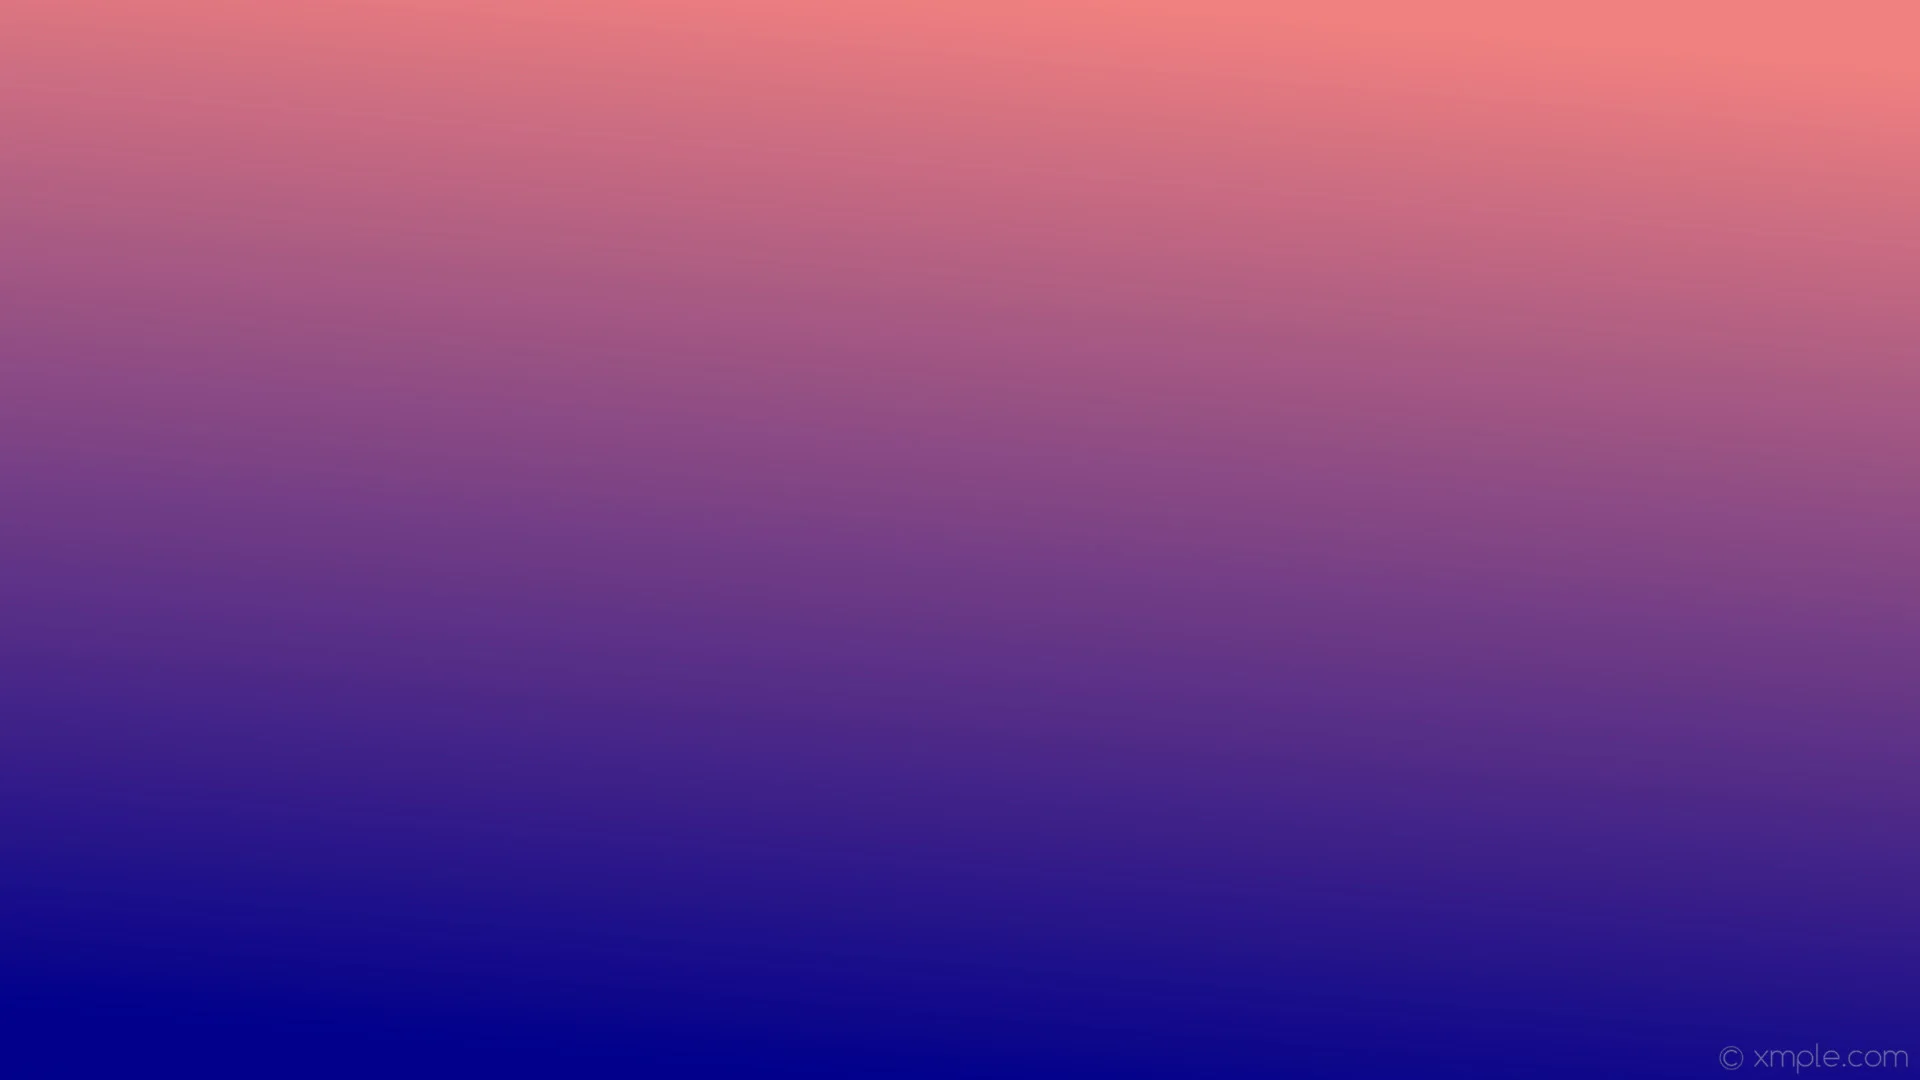 Wallpaper red blue gradient linear light coral dark blue #f08080 b 75